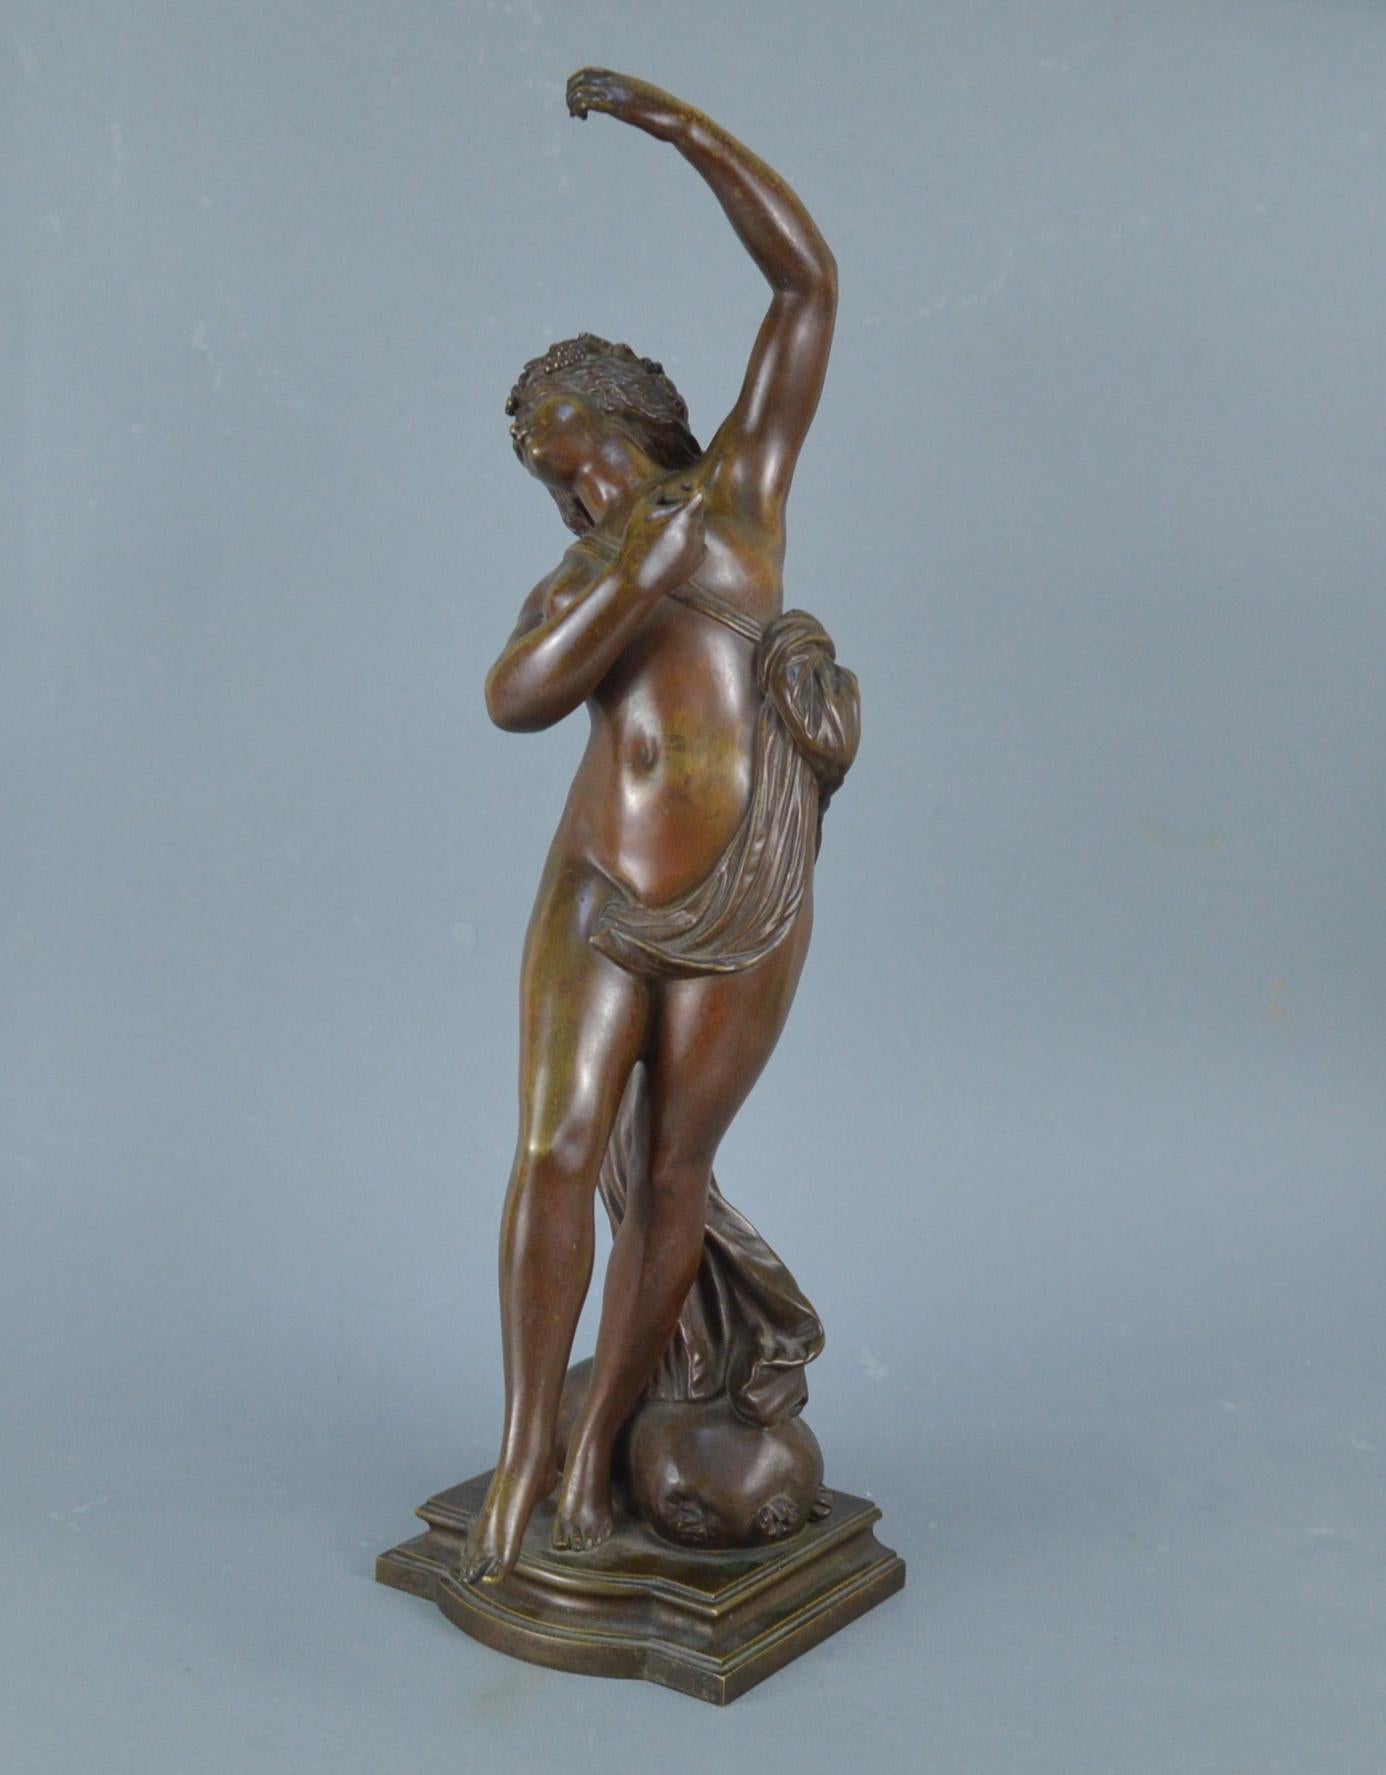 Patinated Bronze Sculpture Representing a Bacchante 19th Century (19. Jahrhundert)